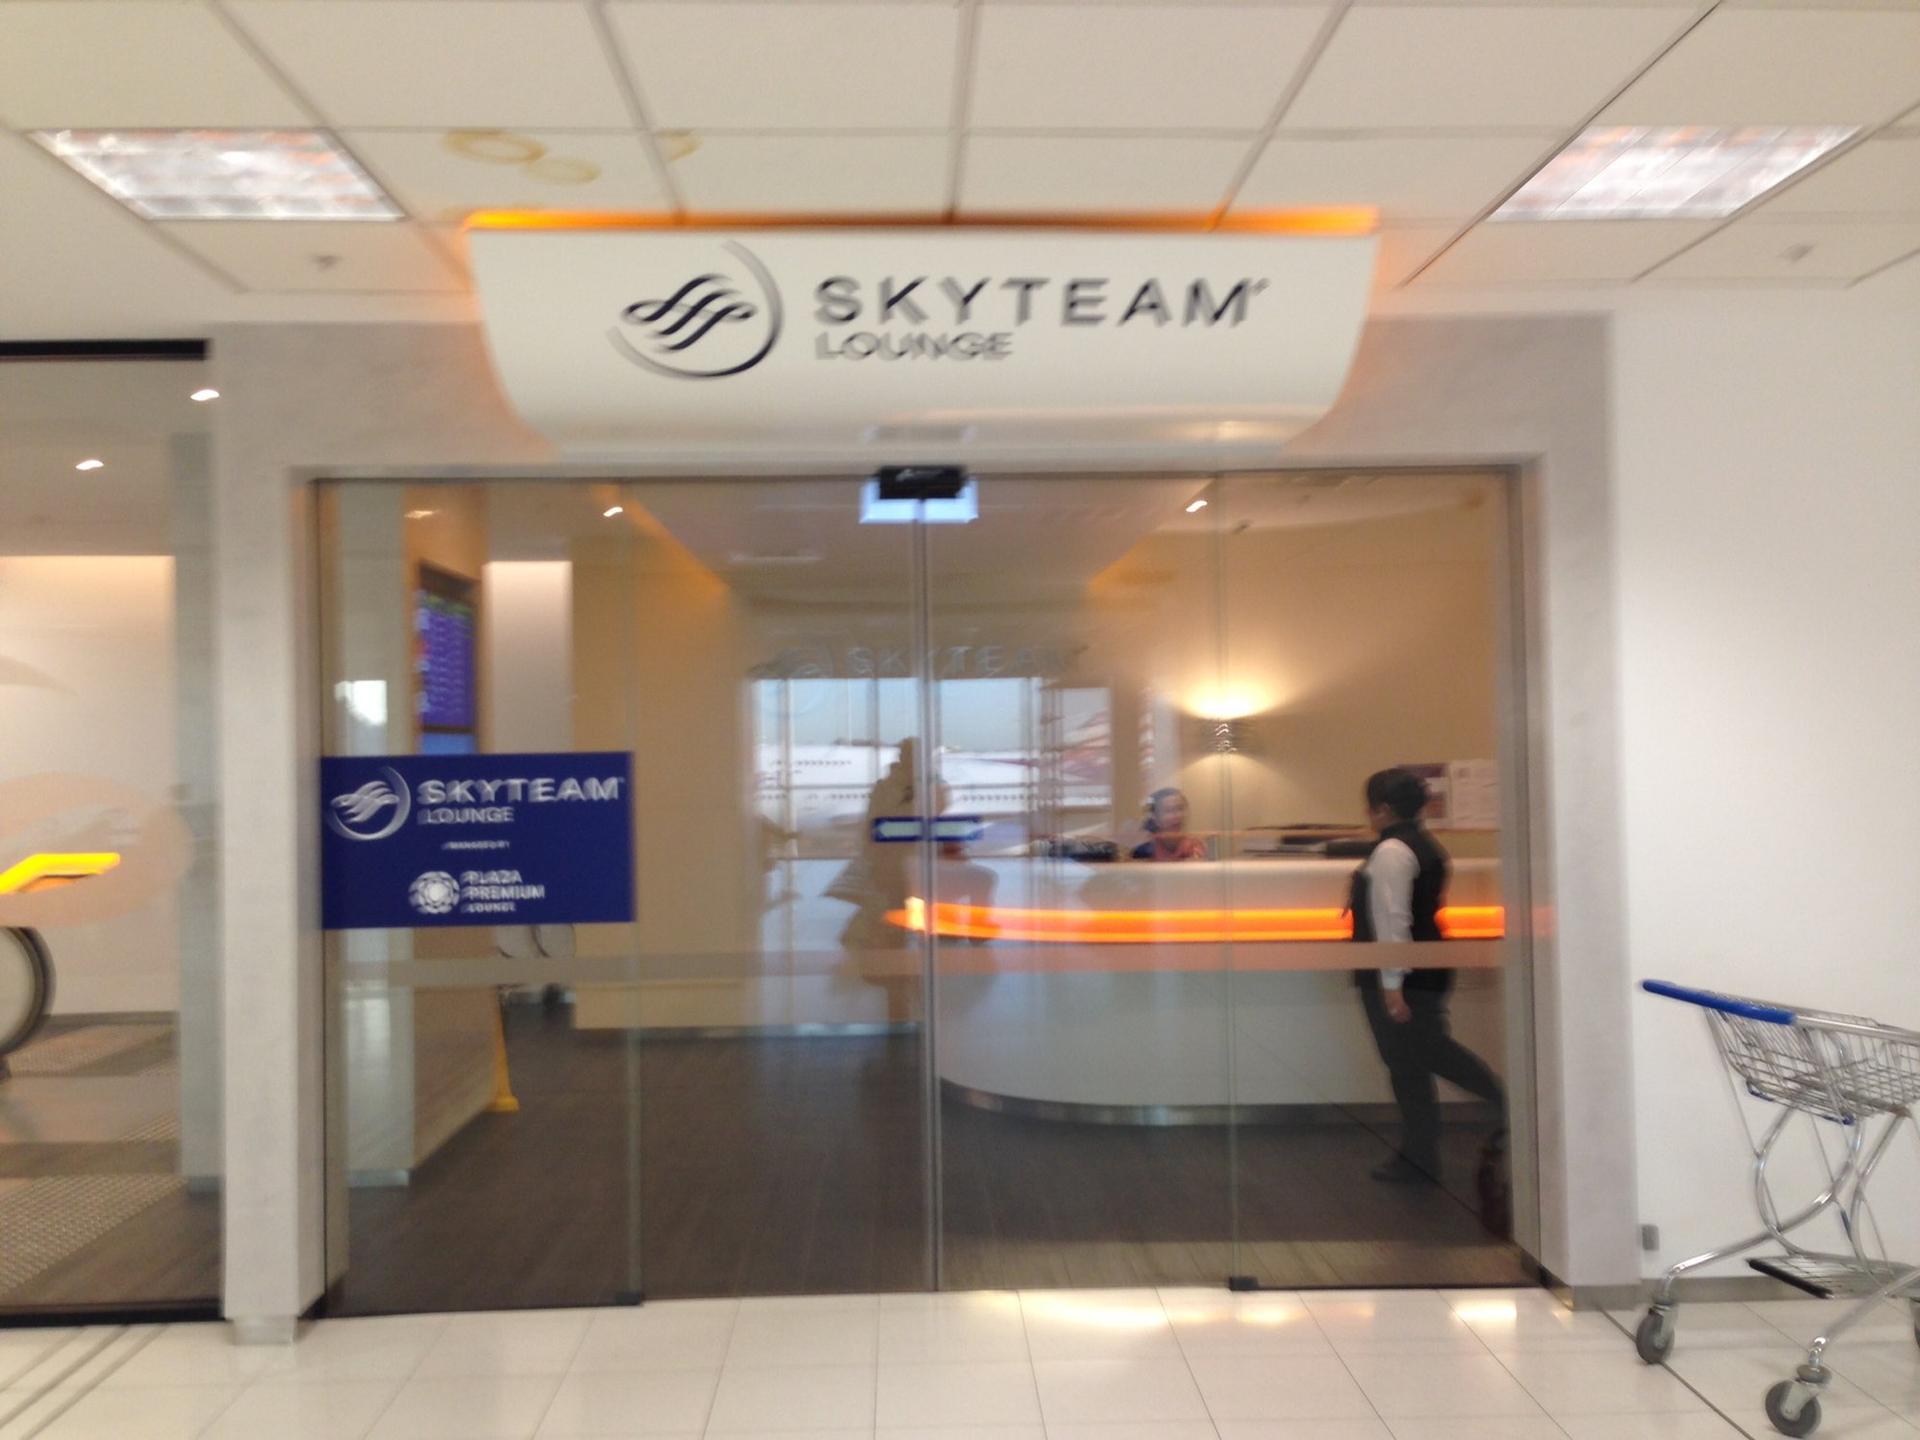 SkyTeam Lounge image 33 of 41